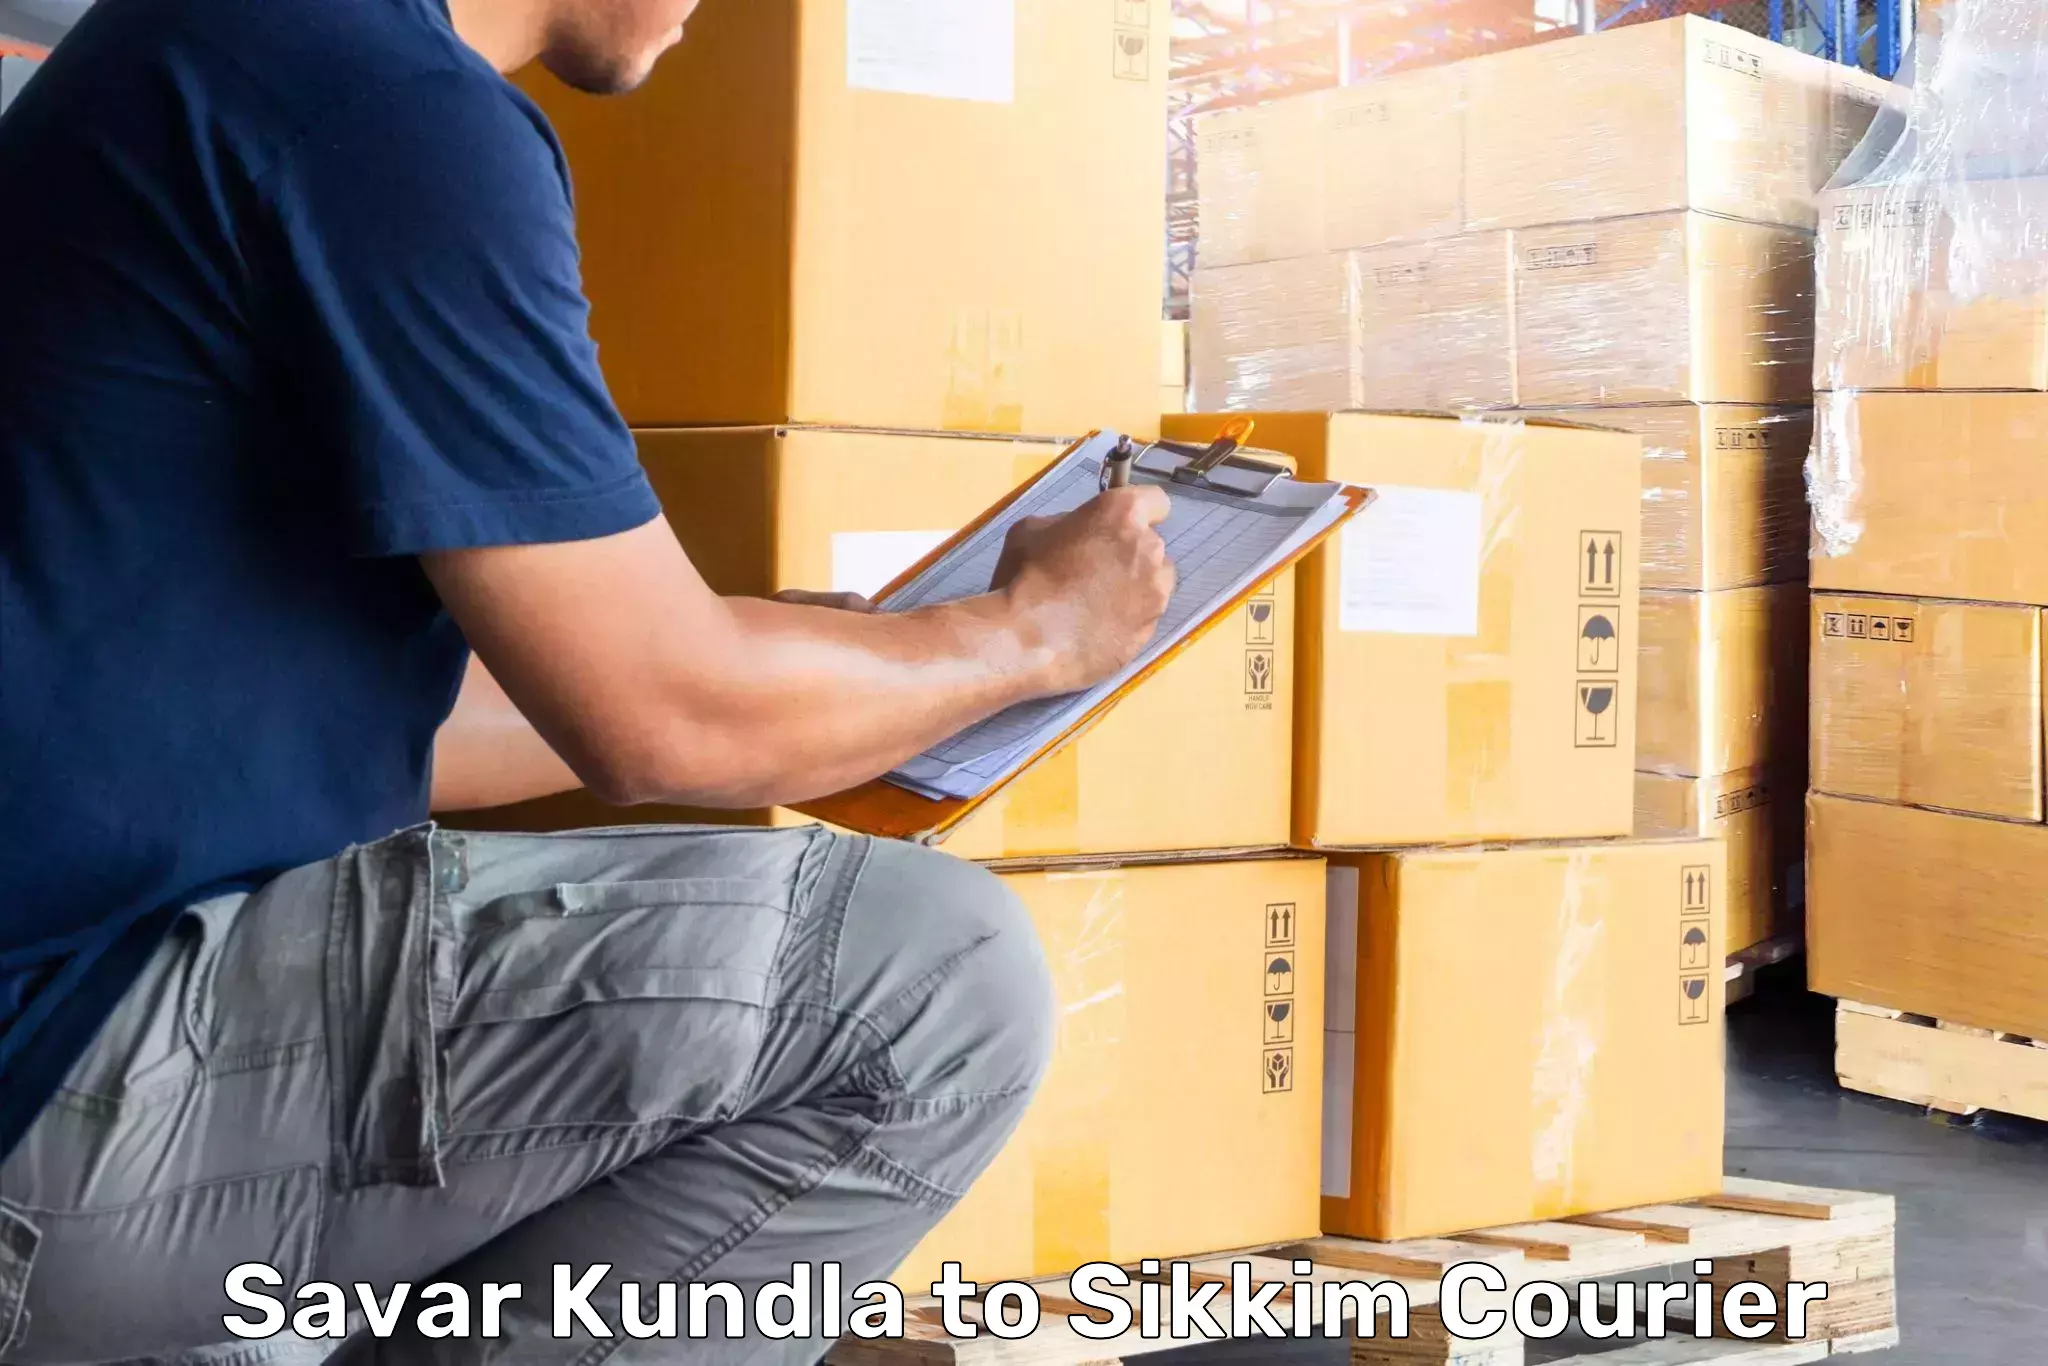 Luggage delivery network Savar Kundla to West Sikkim